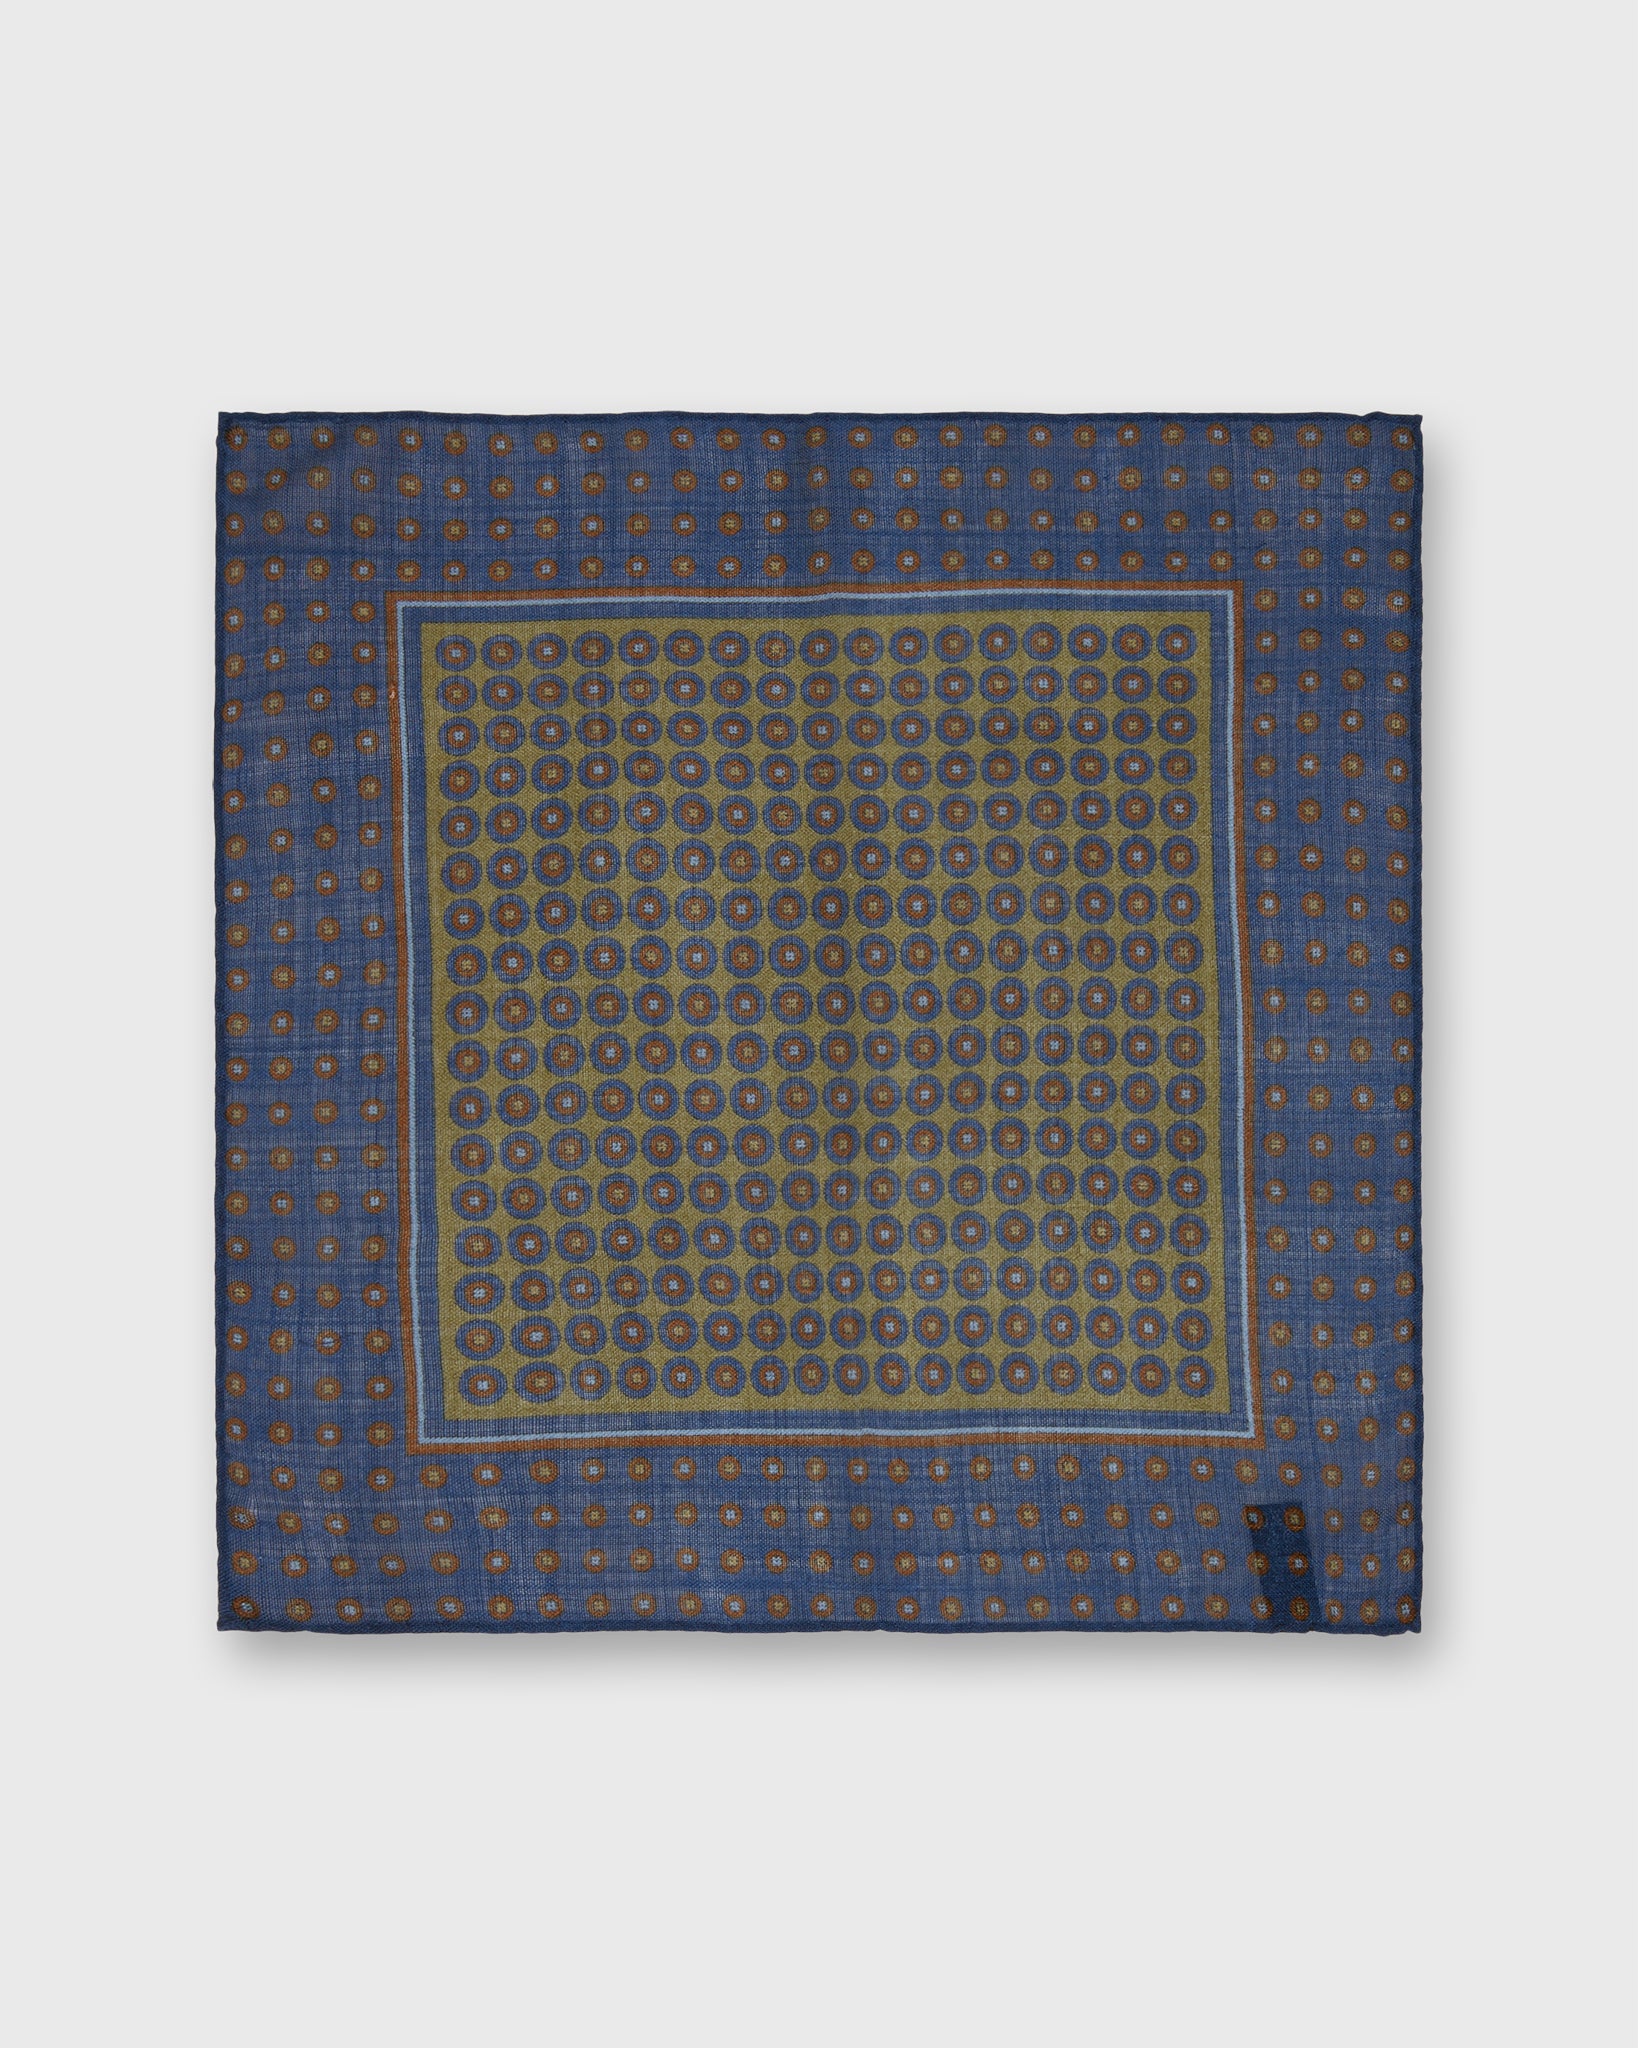 Wool/Silk Pocket Square in Blue/Stone Medallion